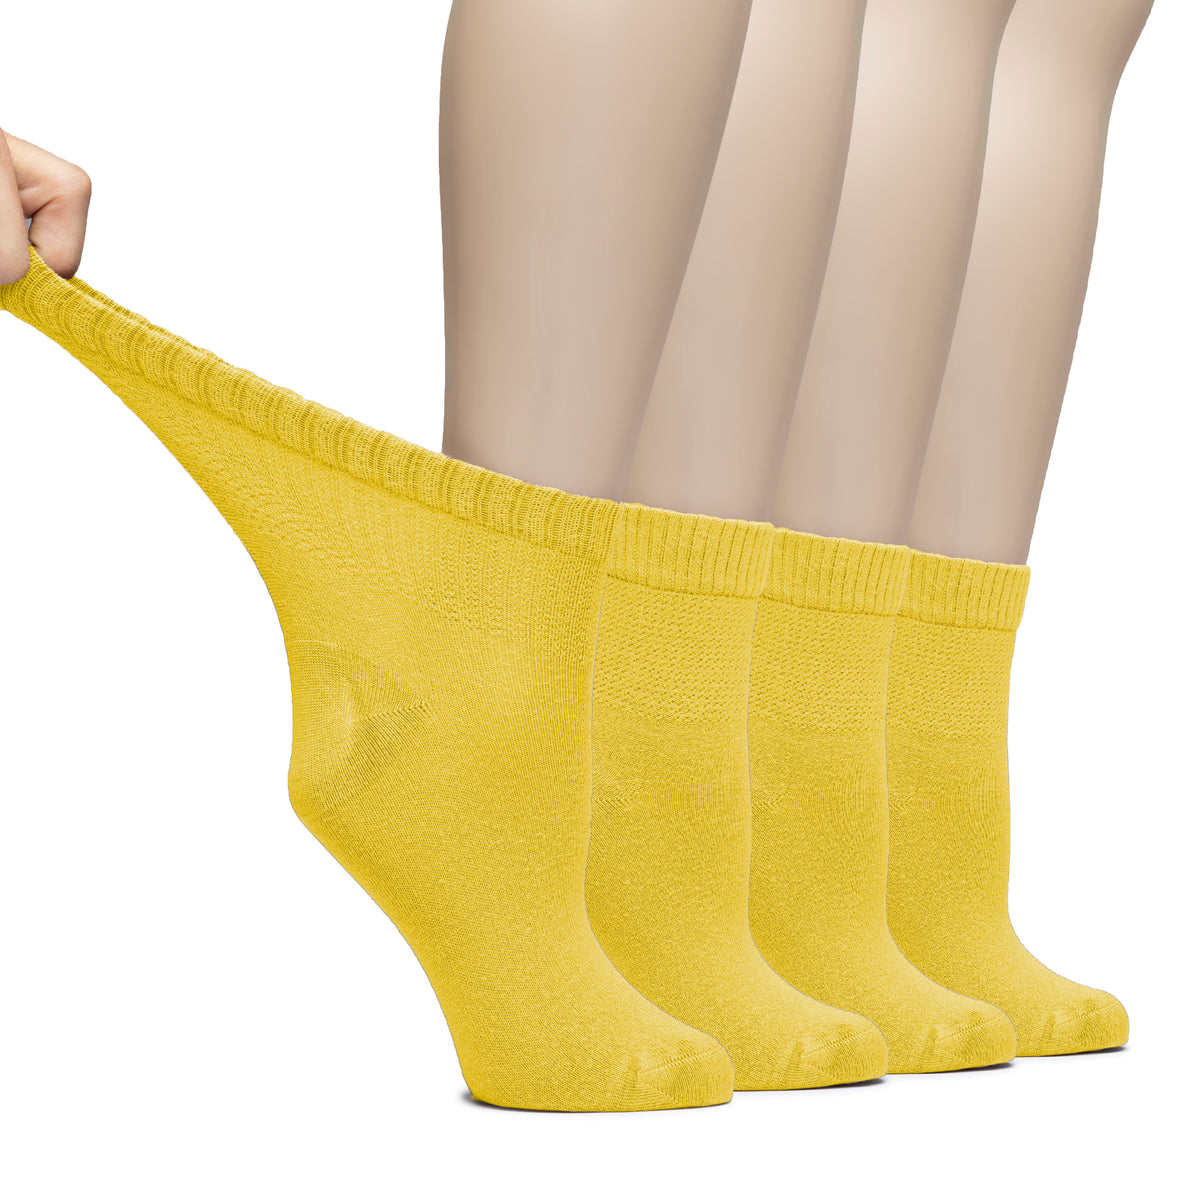 Hugh Ugoli Lightweight Women's Diabetic Ankle Socks Bamboo Thin Socks Seamless Toe and Non-Binding Top, 4 Pairs, , Shoe Size: 6-9/10-12 |  | 